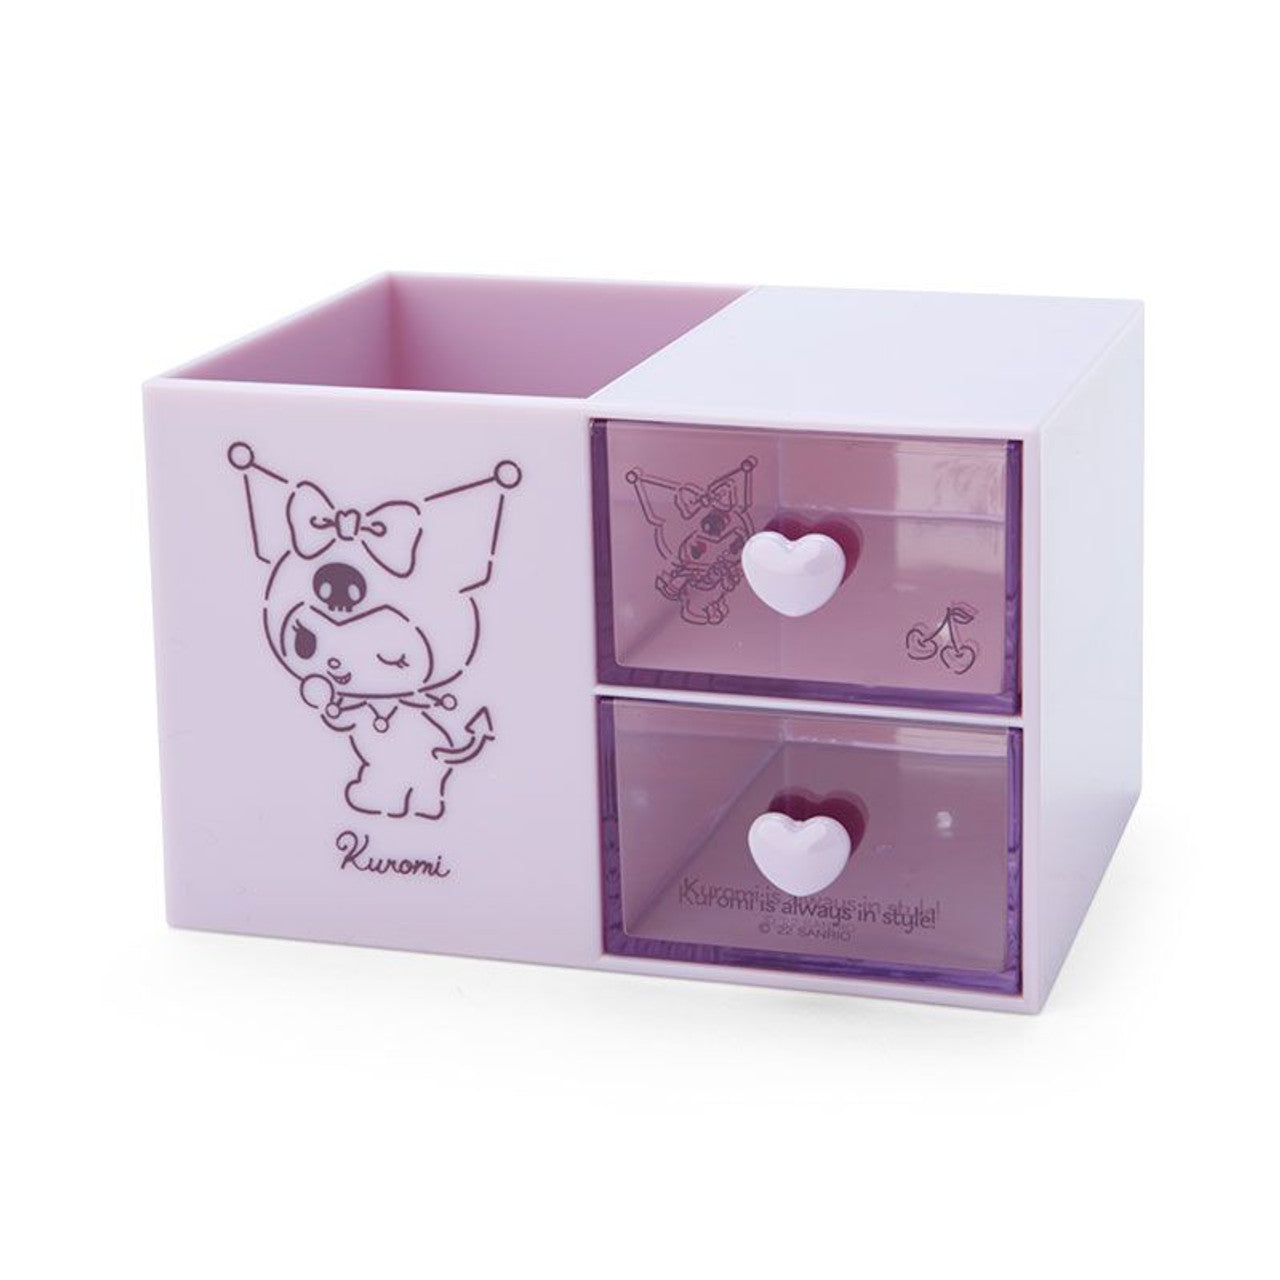 Sanrio Accessory Box with Pen Stand (Calm Color) - Kuromi (505056)